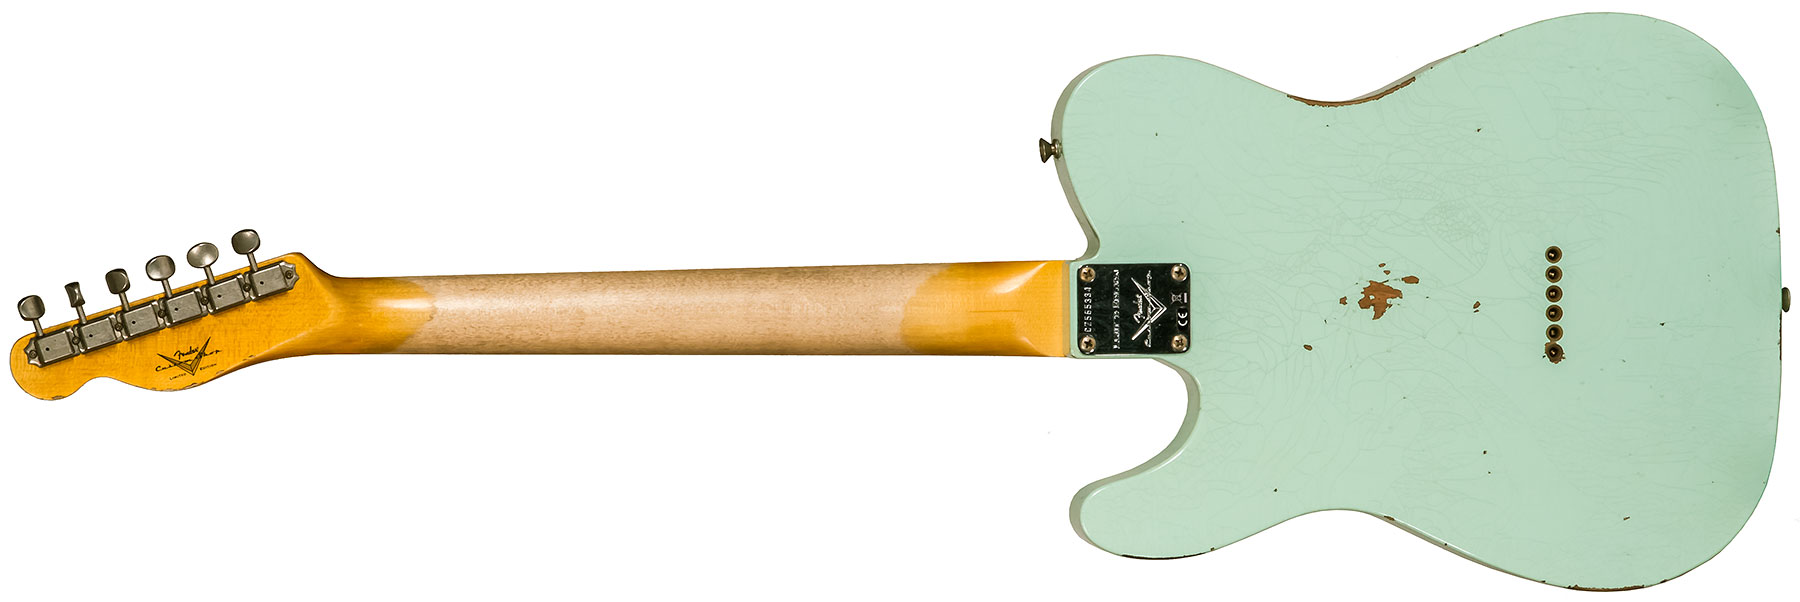 Fender Custom Shop Tele 1961 2s Ht Rw #cz565334 - Relic Faded Surf Green - Televorm elektrische gitaar - Variation 1